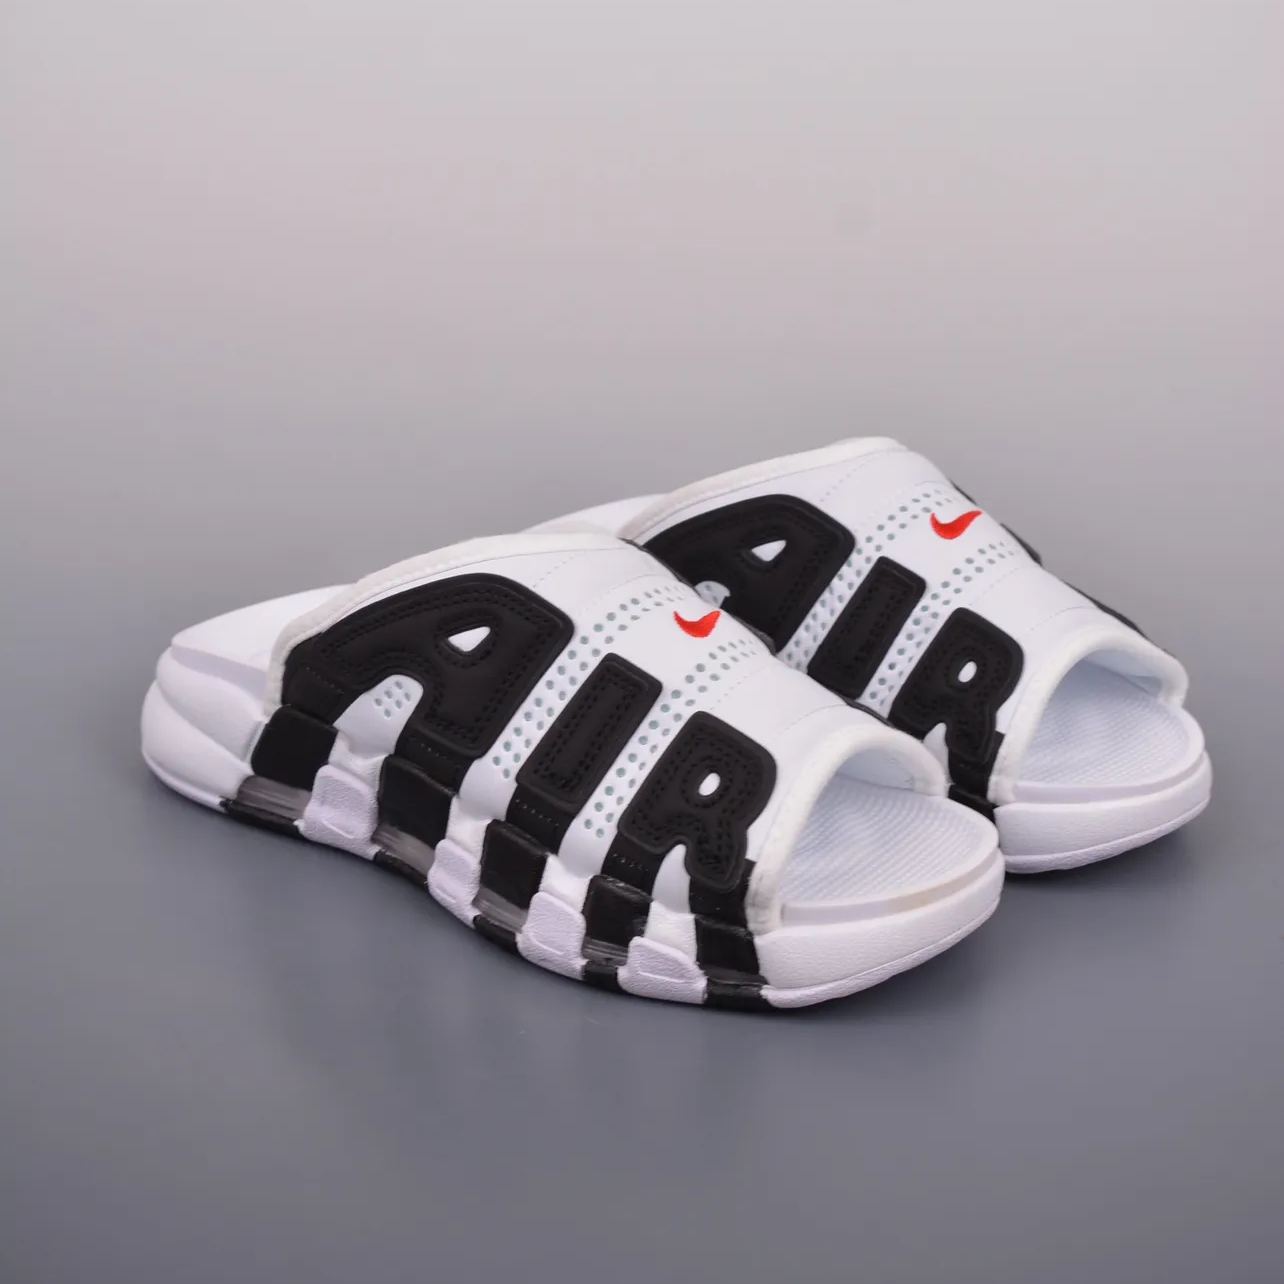 Nike Air More Uptempo Slide 